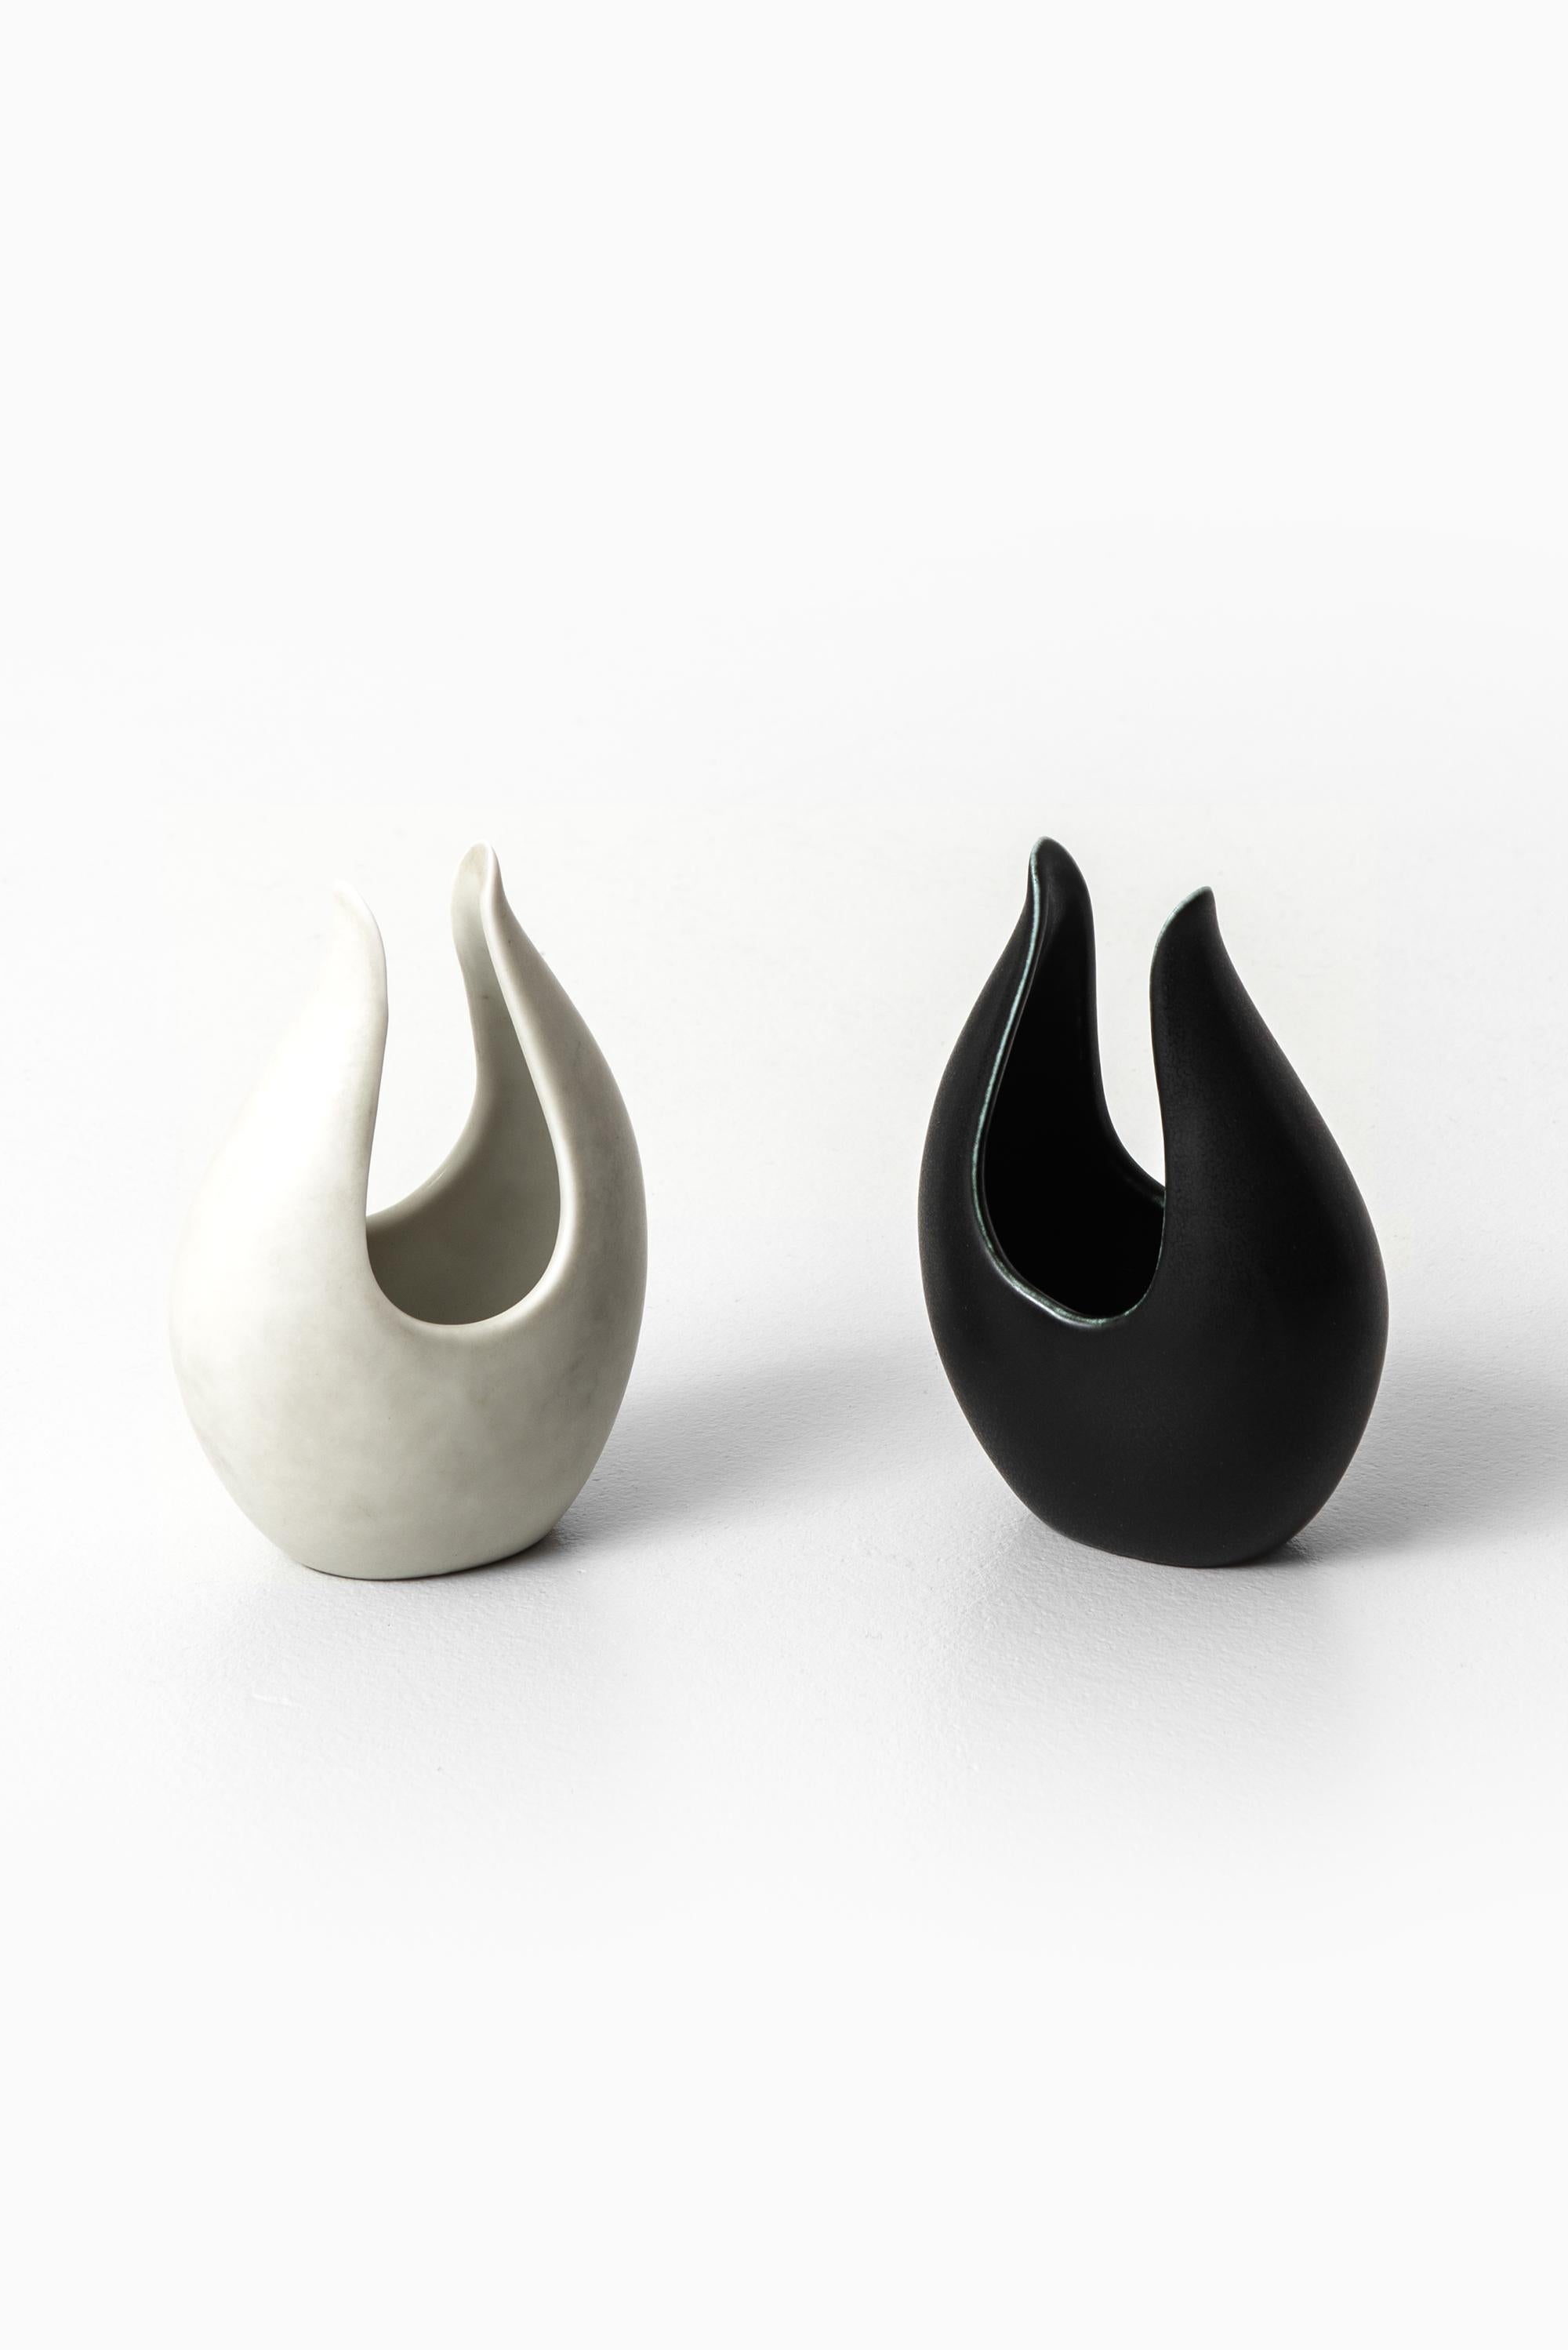 Swedish Gunnar Nylund Ceramic Vases Model Caolina by Rörstrand in Sweden For Sale